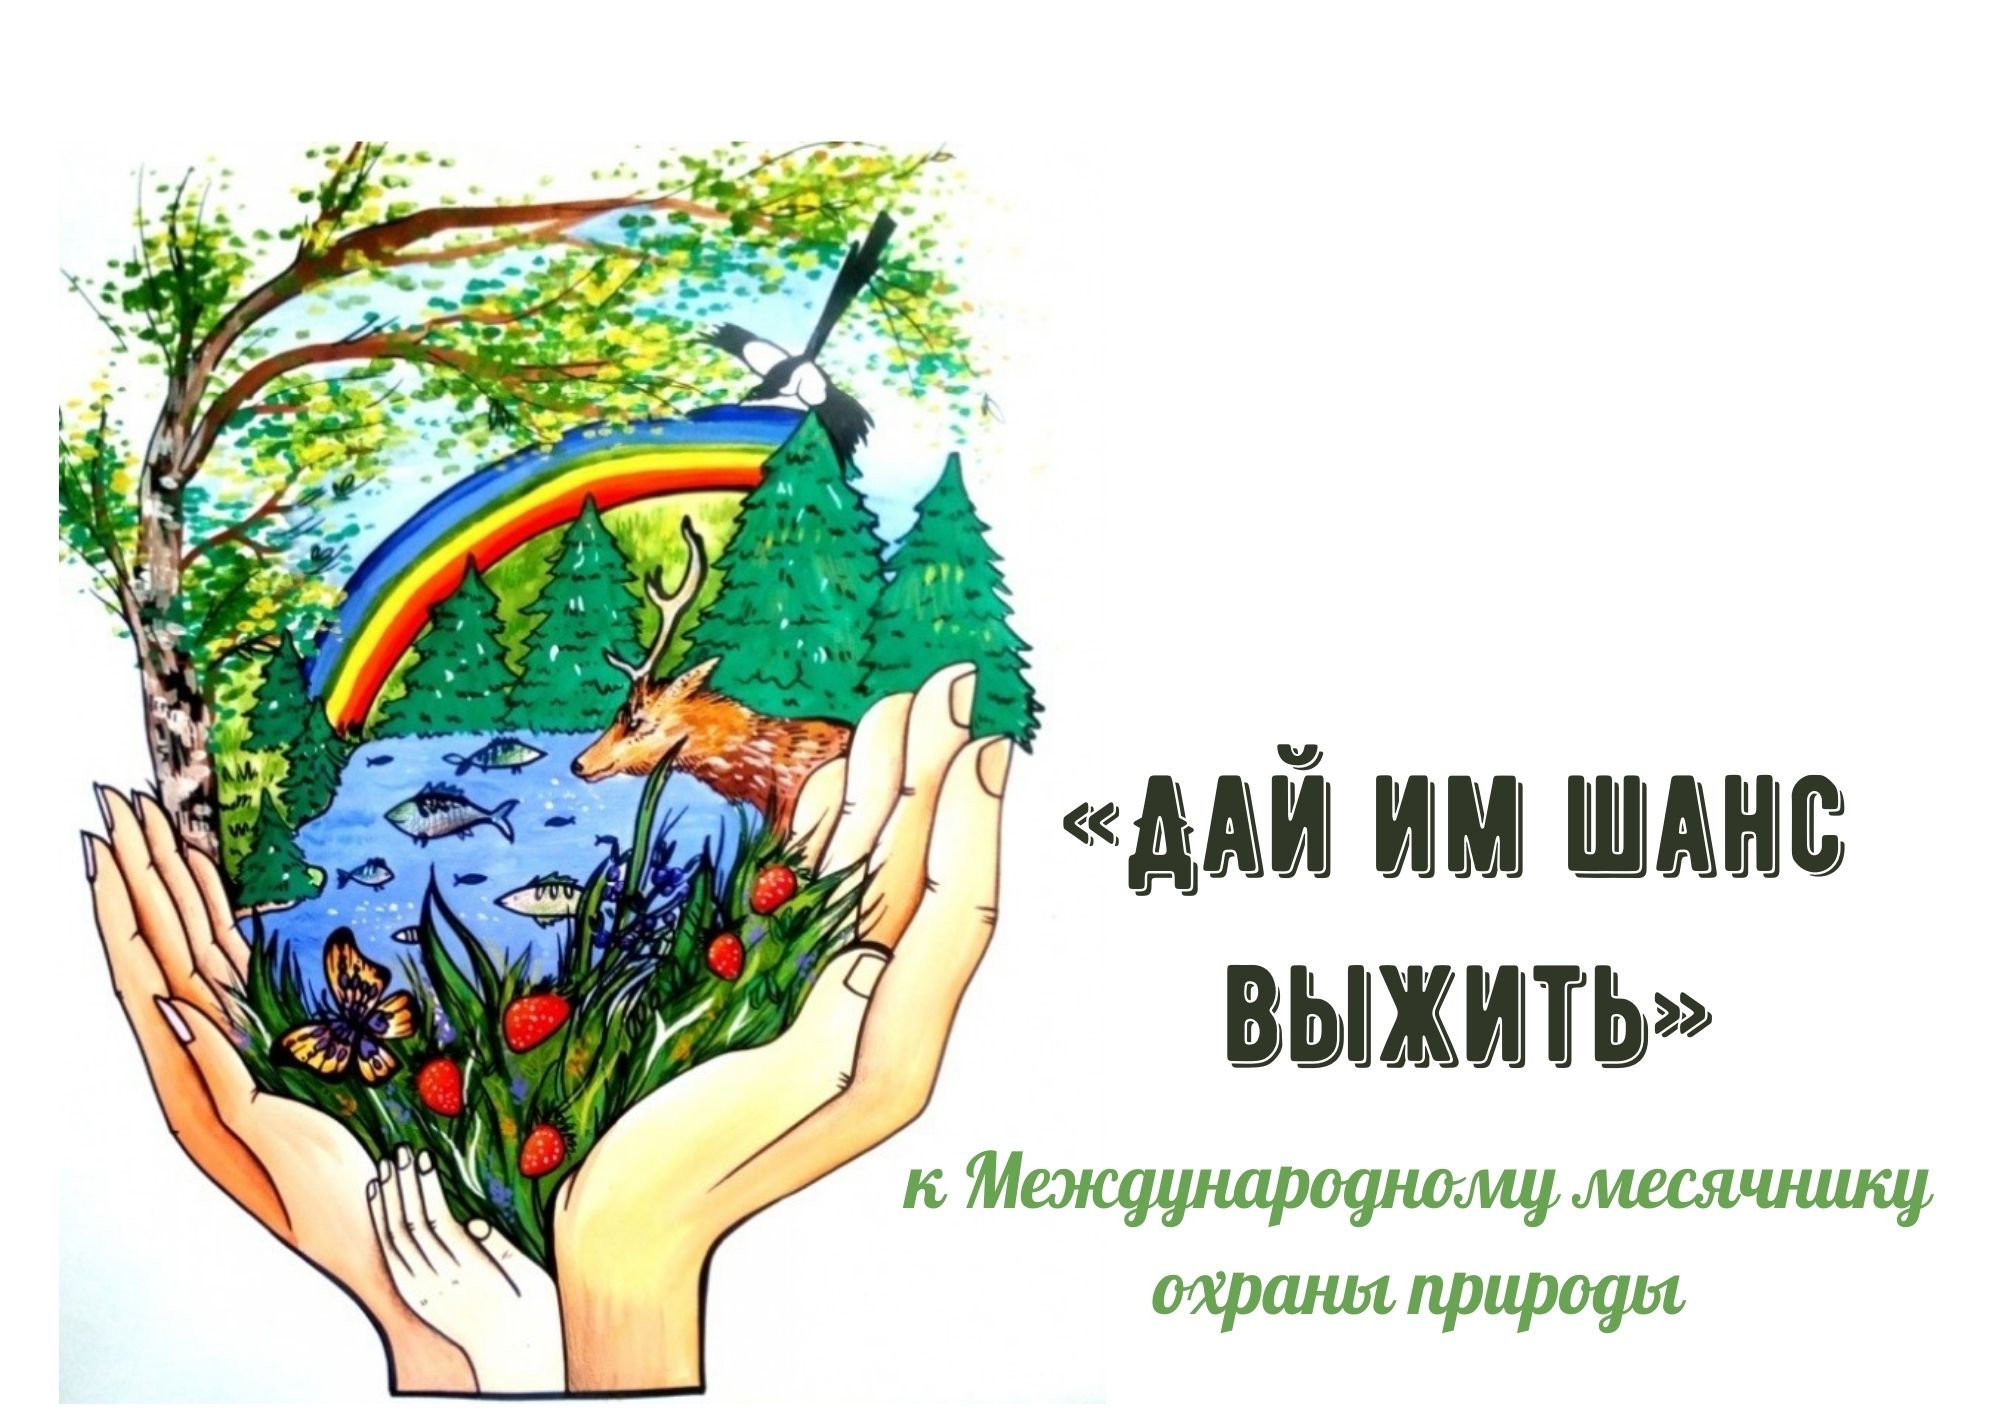 Предложение о защите природы. Защита и охрана природы. Экология и охрана природы. Плакат охрана природы. Защищайте природу.